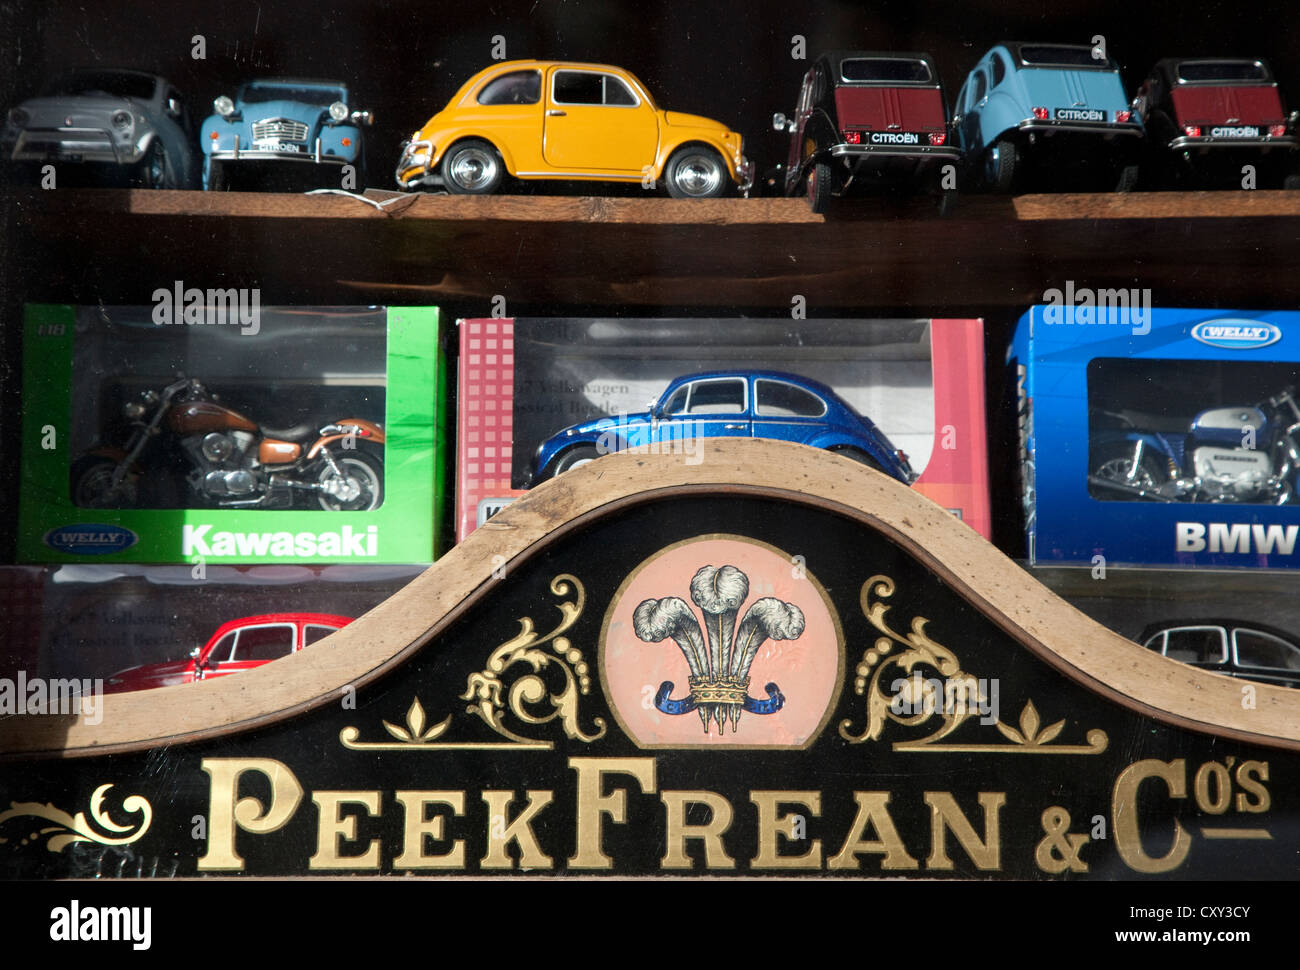 Model cars in London toyshop window Stock Photo